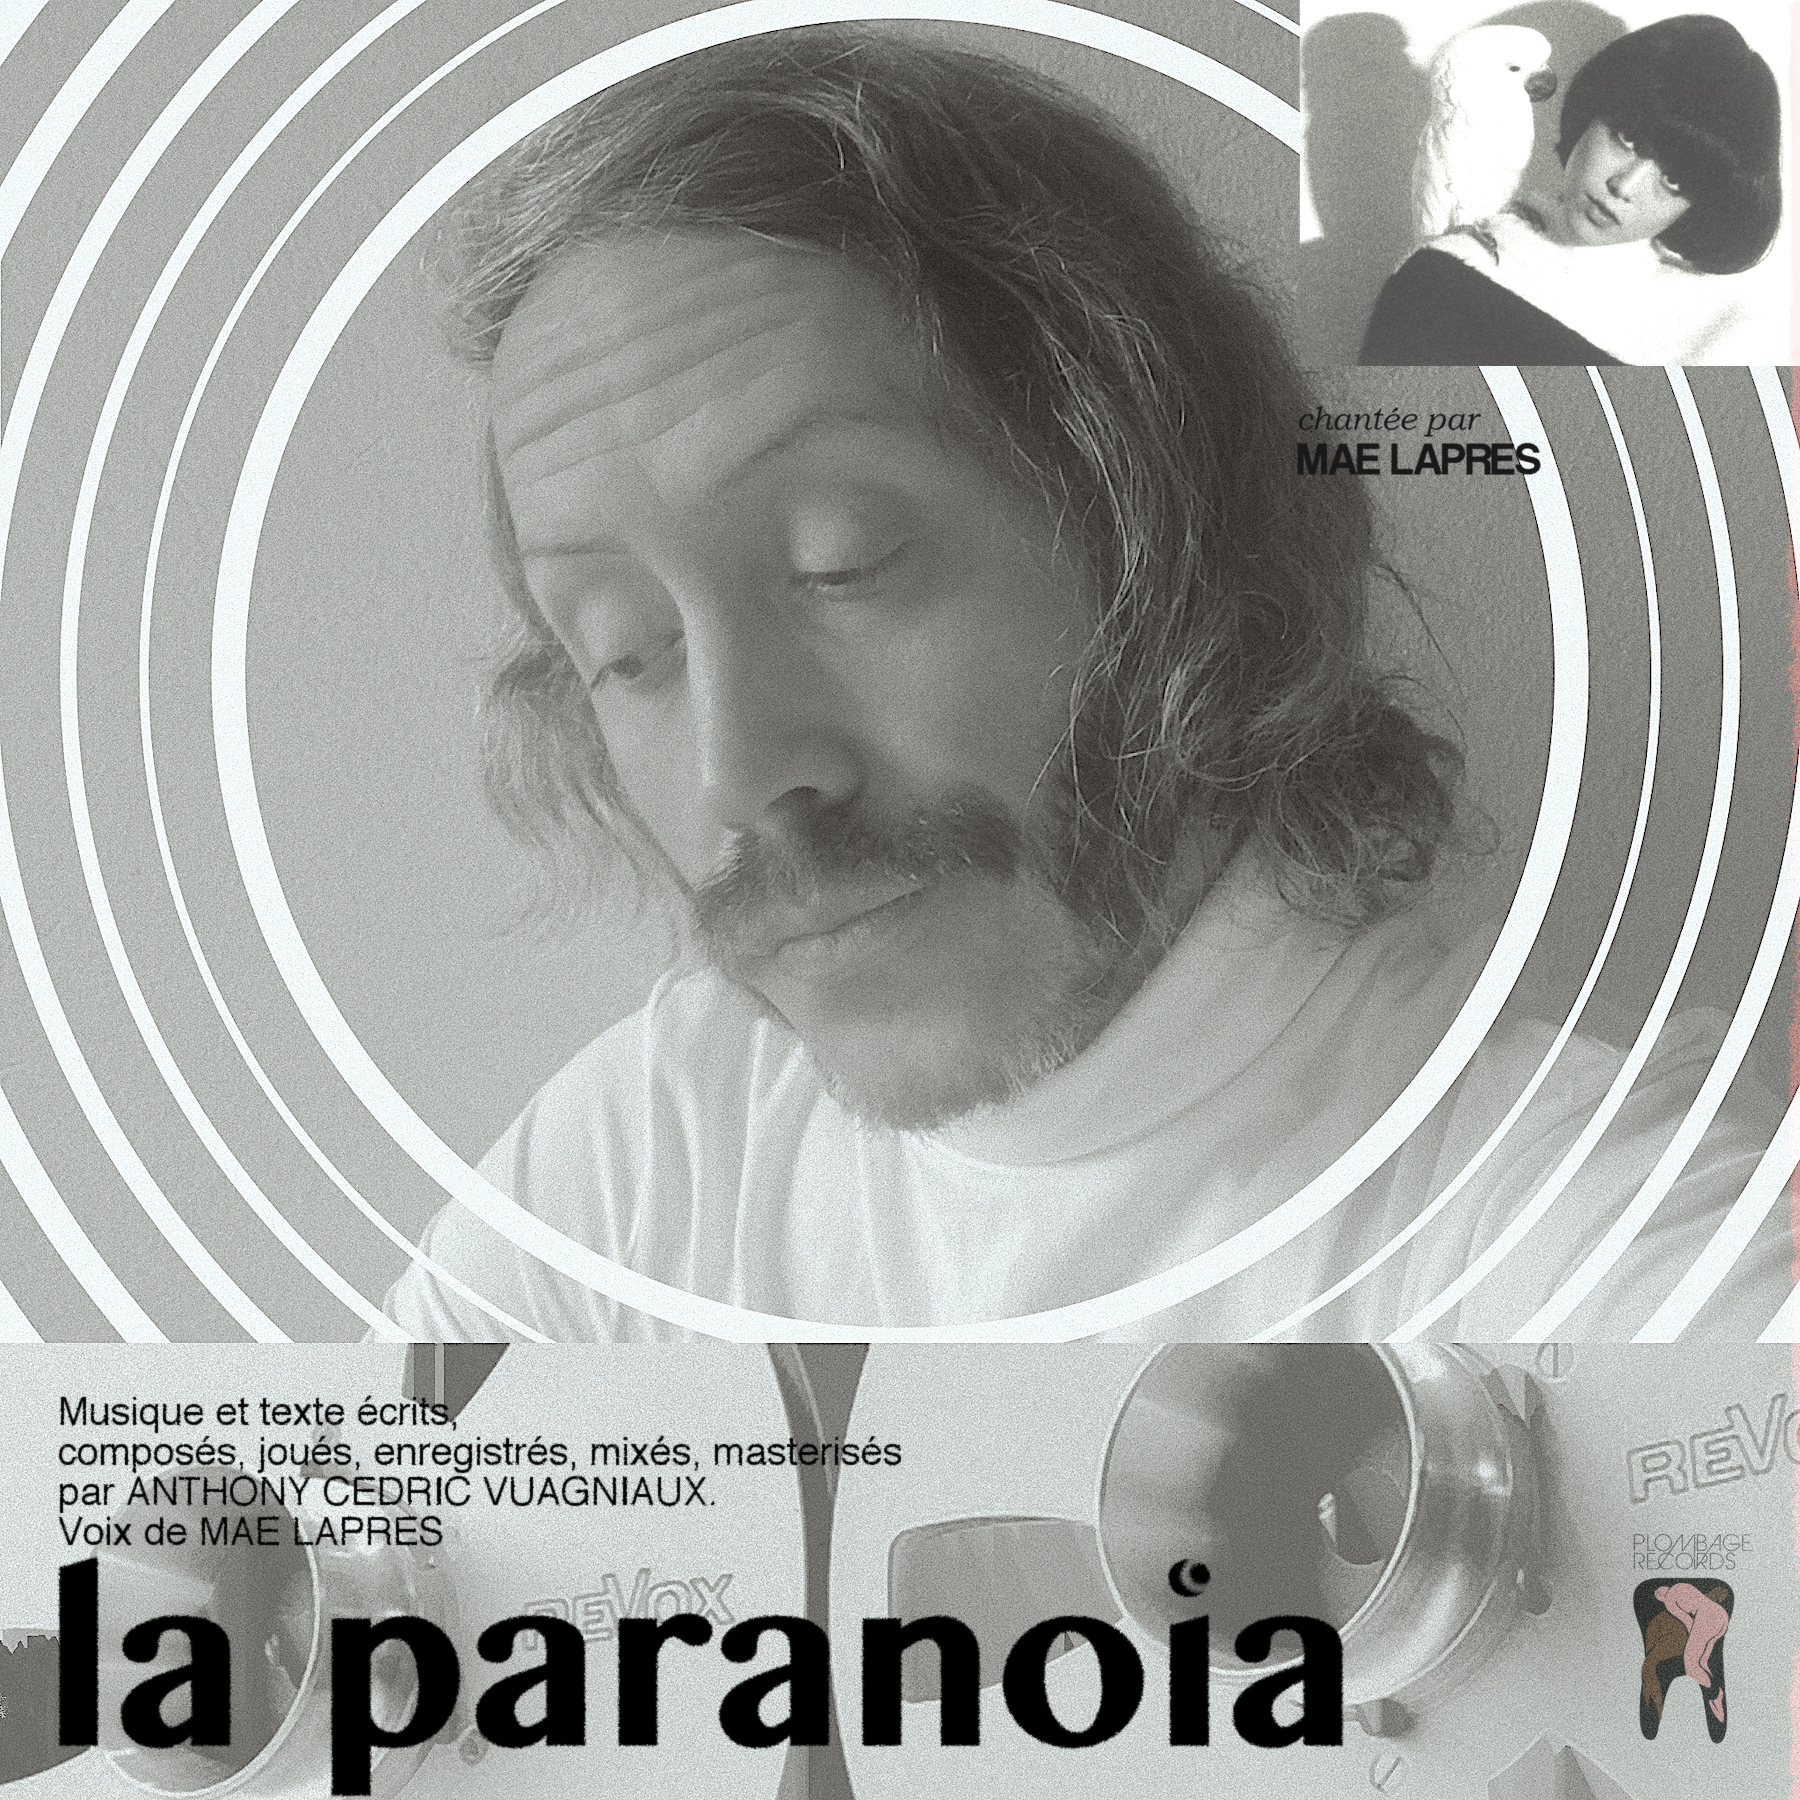 La Paranoïa - Anthony Cedric Vuagniaux